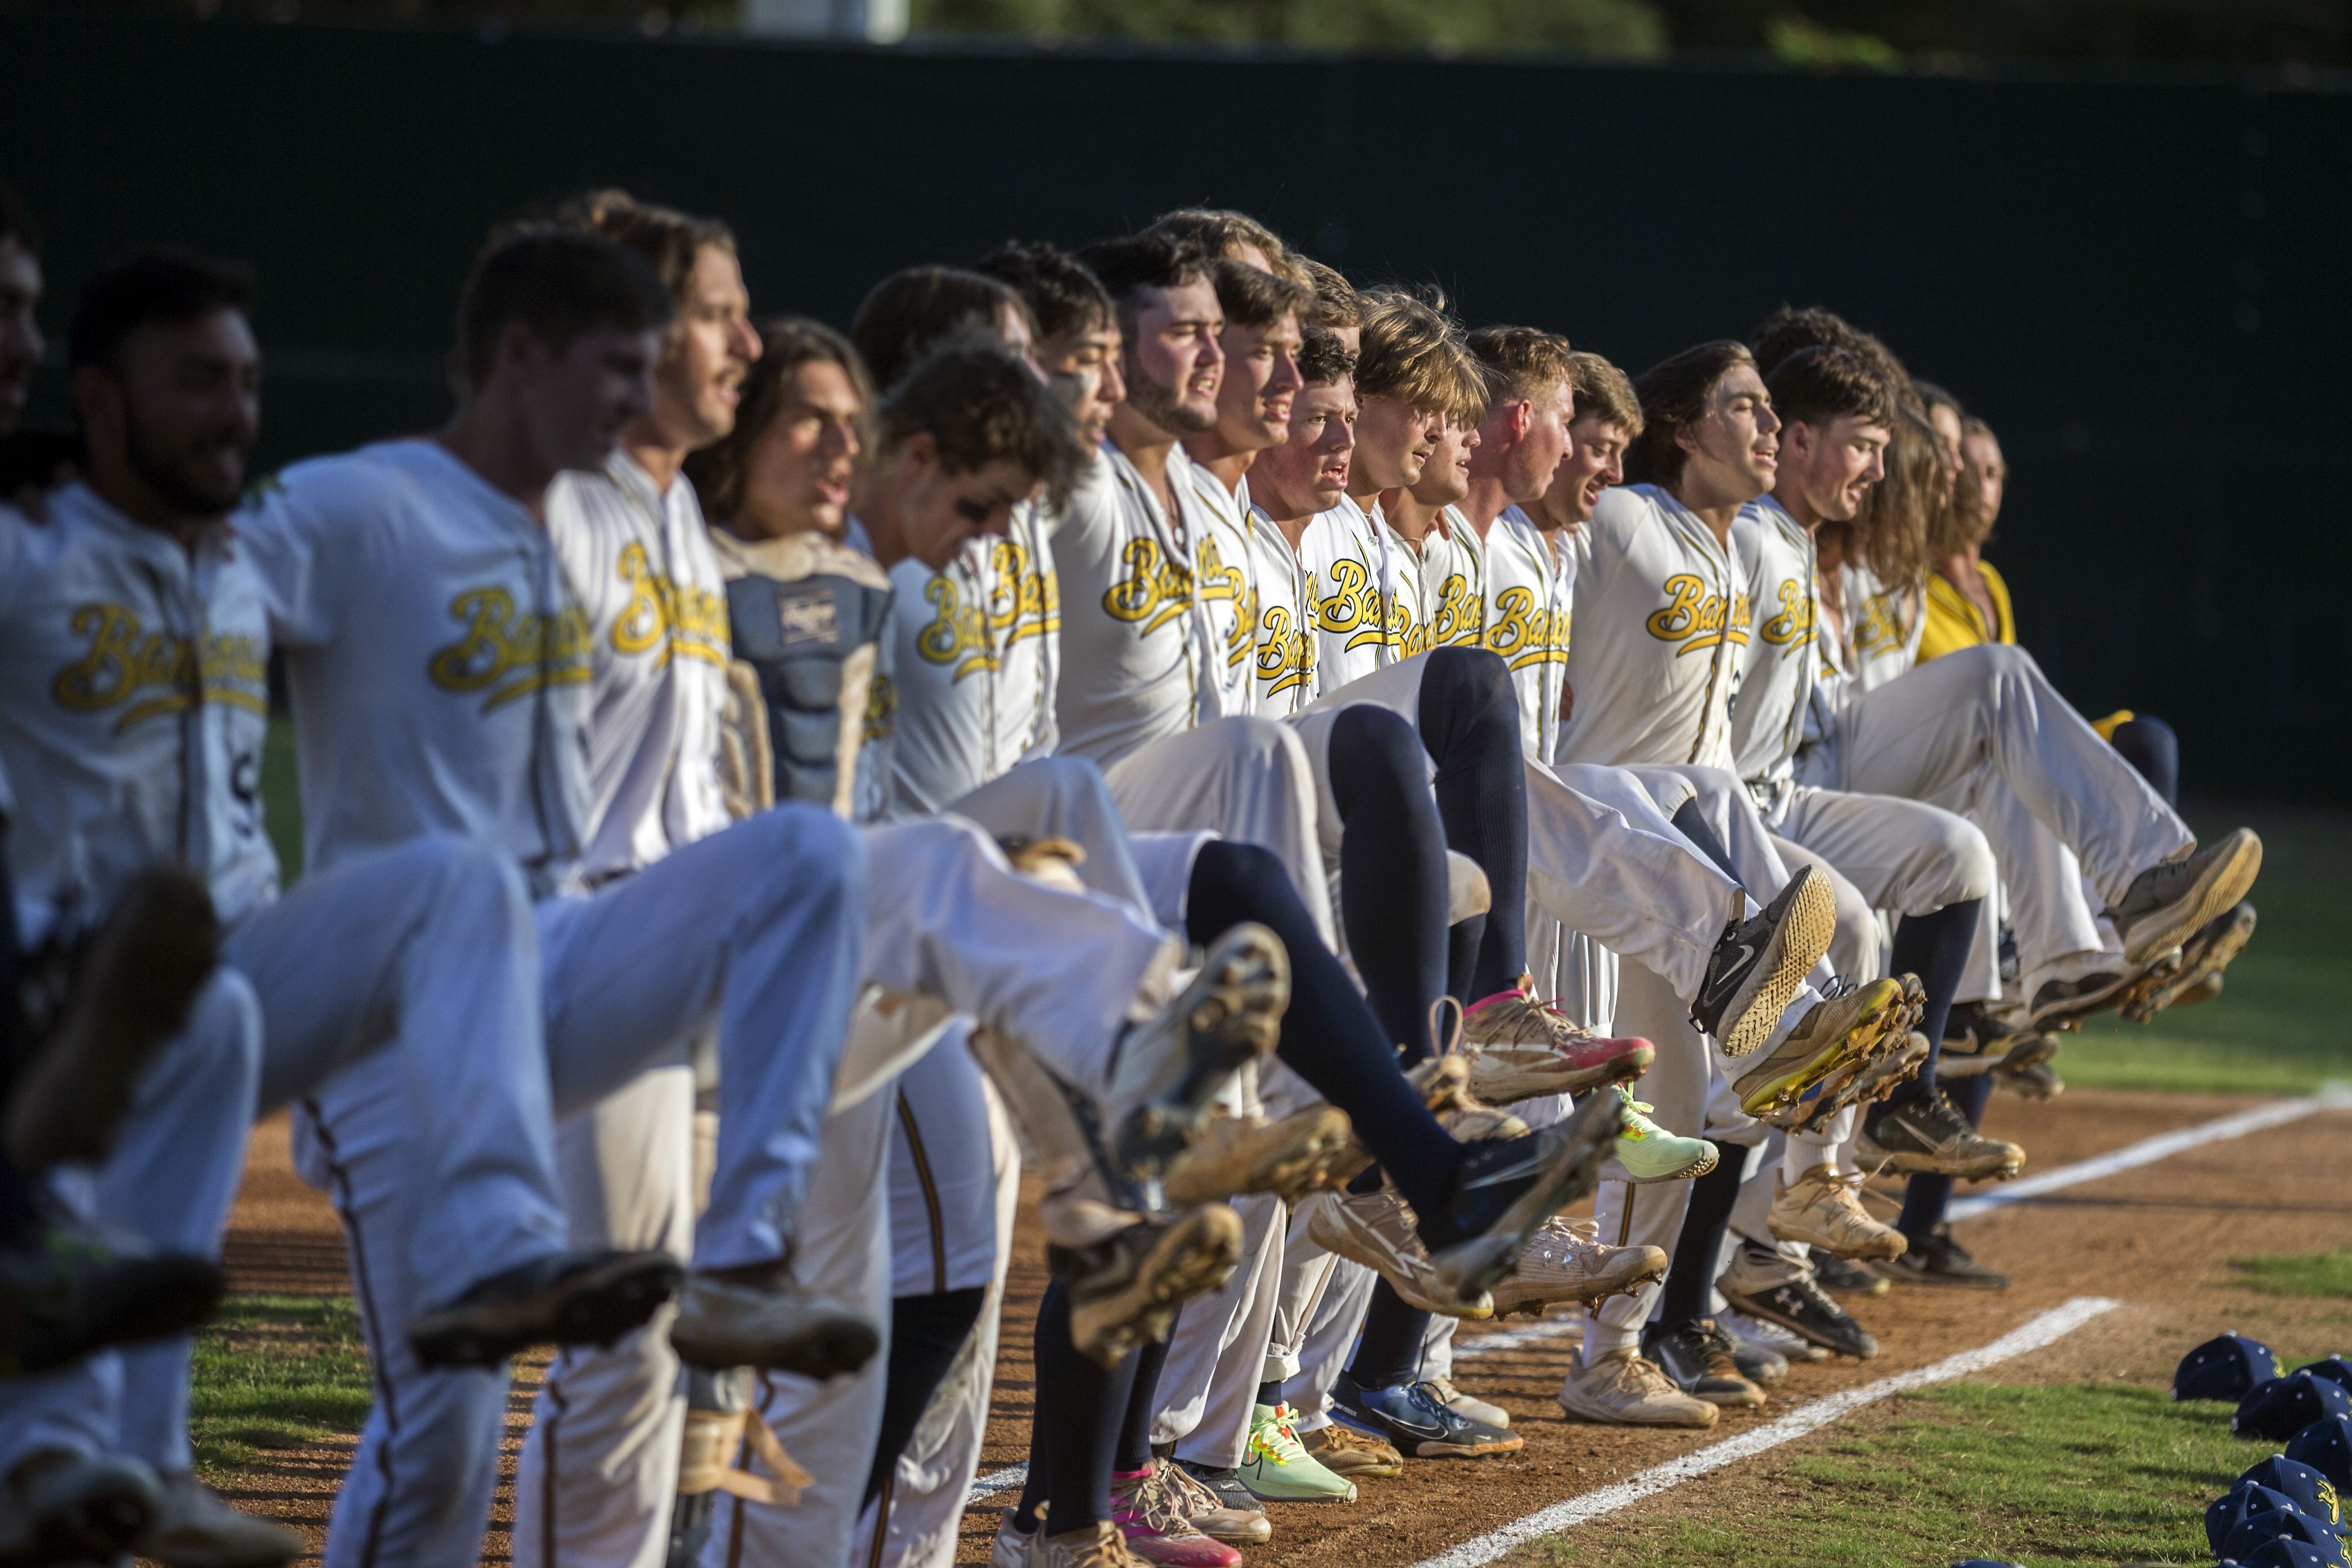 Go bananas! 🍌 The Savannah Bananas baseball team is coming to